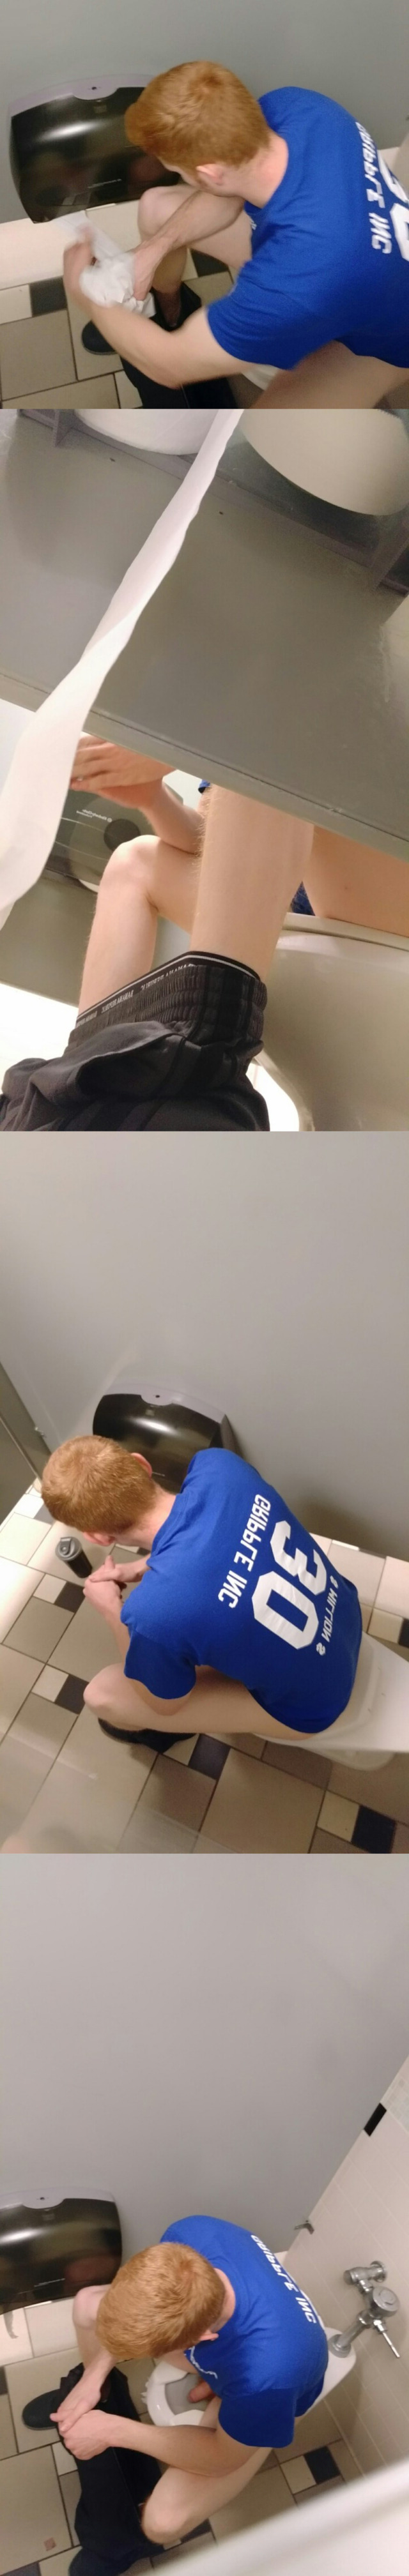 guy sitting public toilet bowl spycam